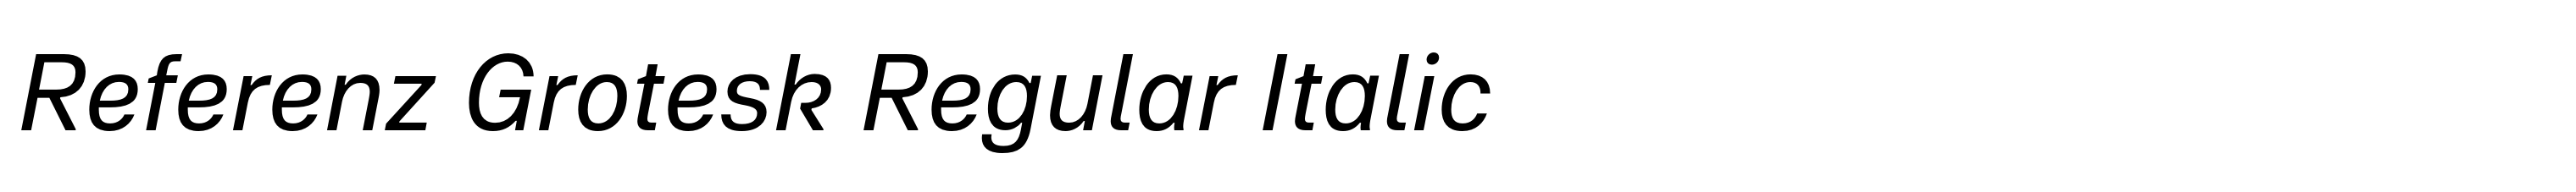 Referenz Grotesk Regular Italic